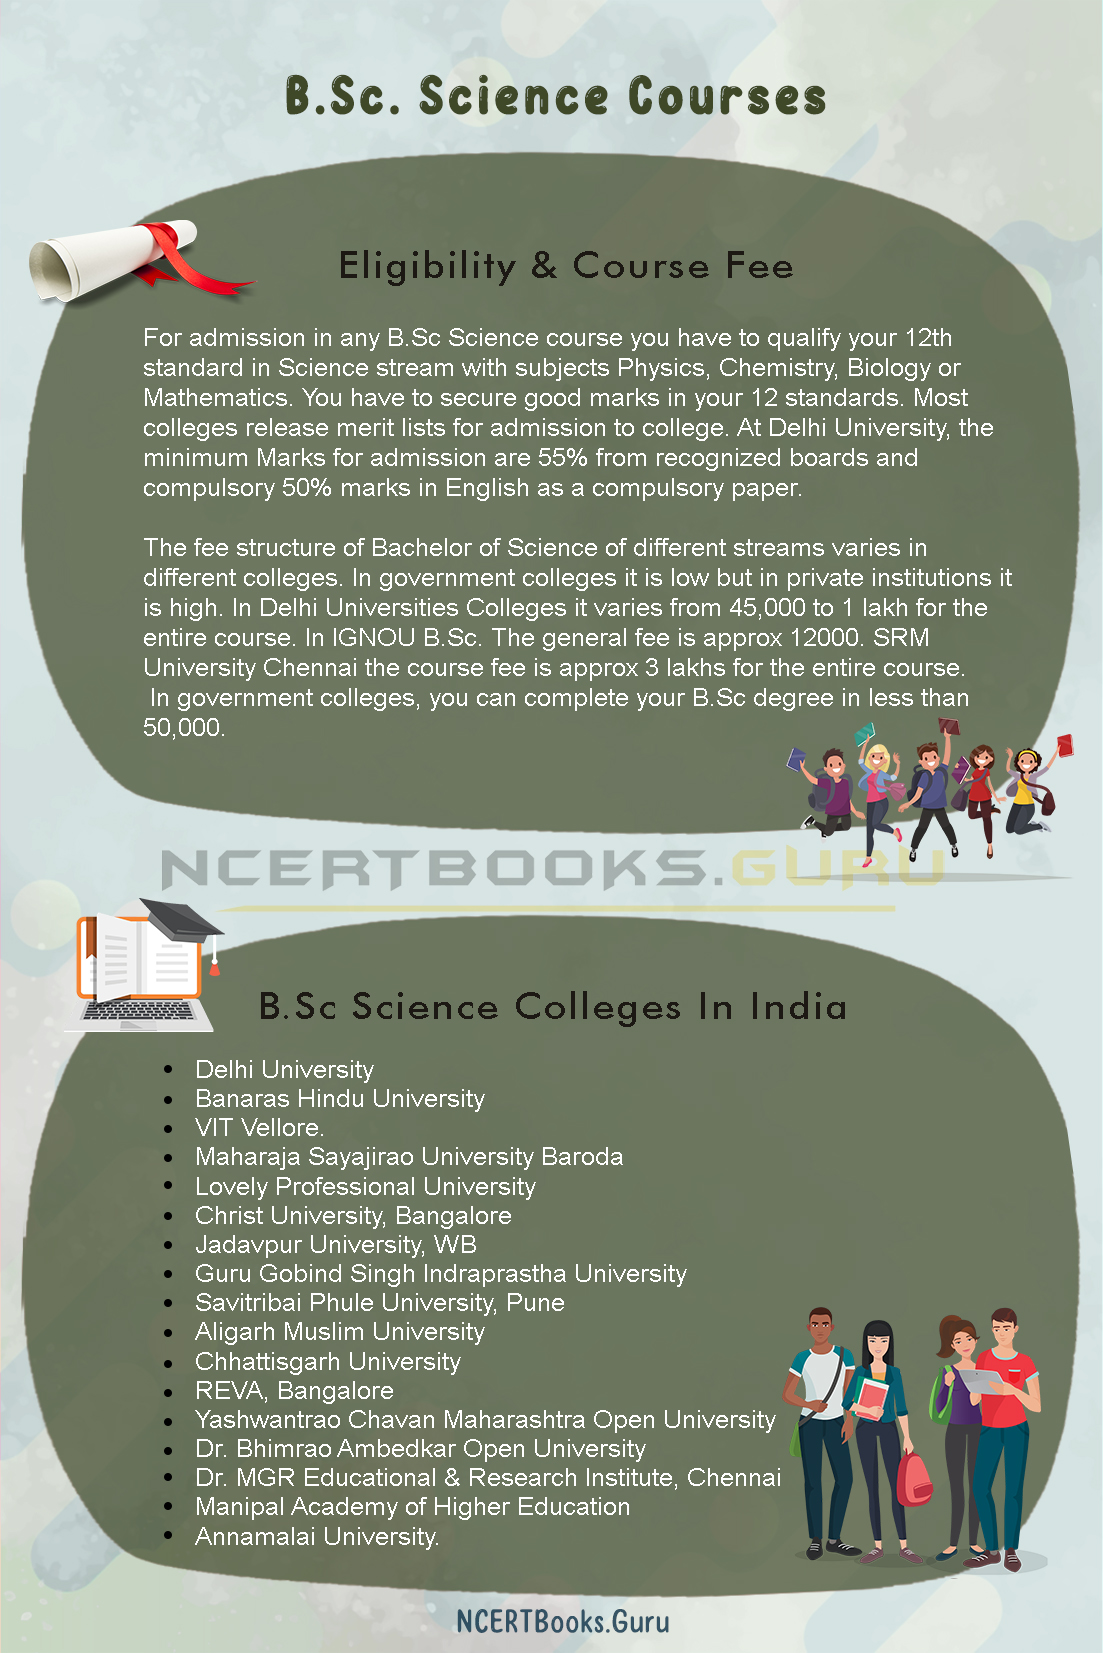 B.Sc. Science Courses